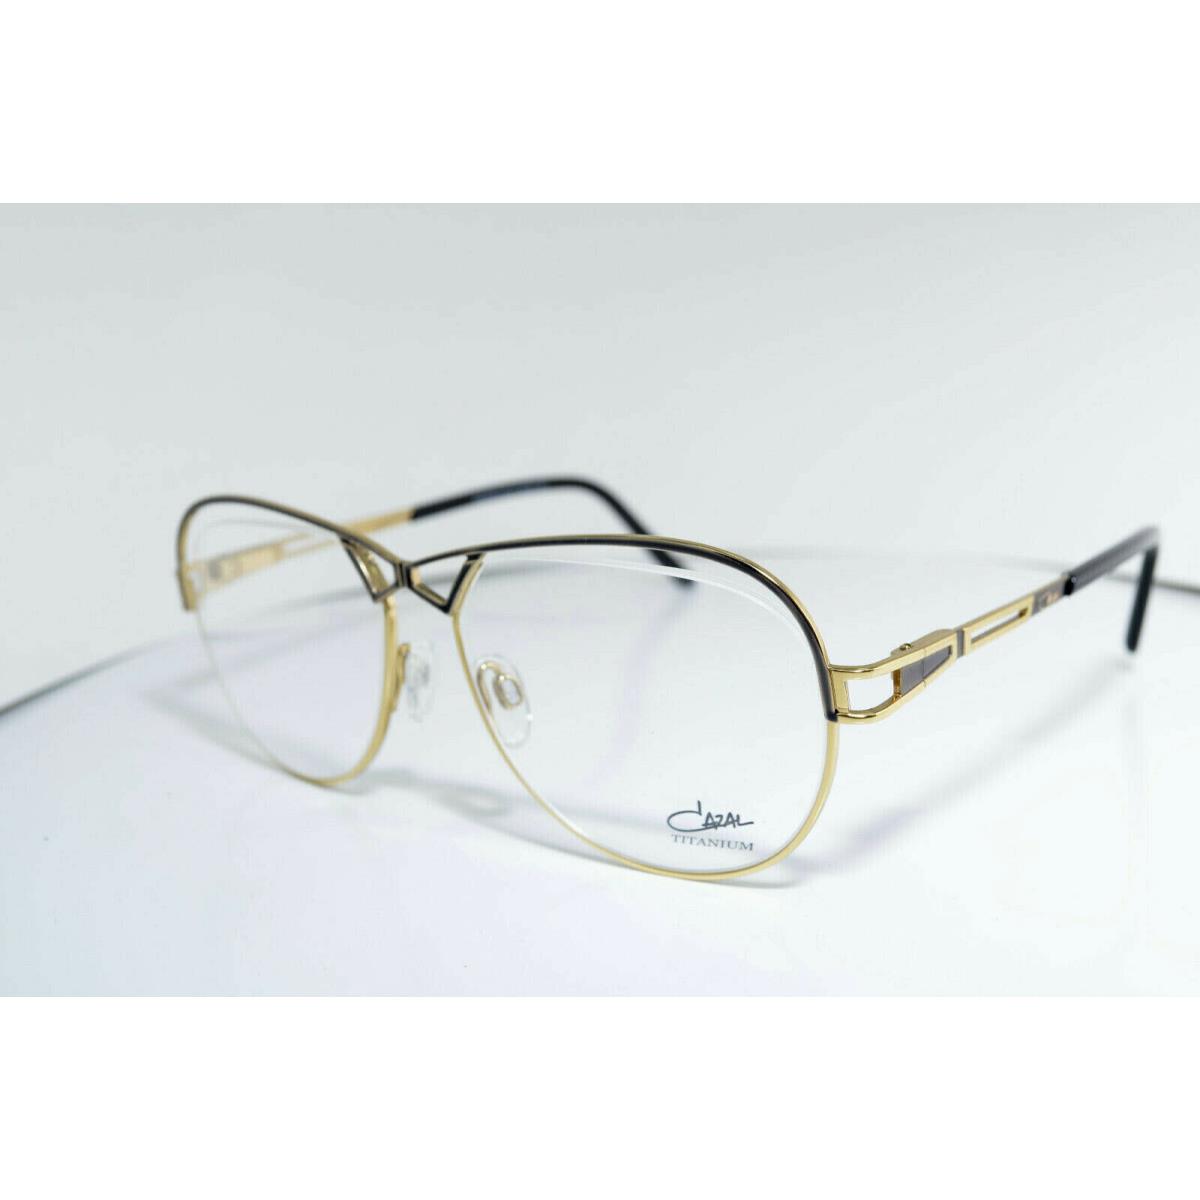 Cazal 4265 C001 Eyeglasses Frame